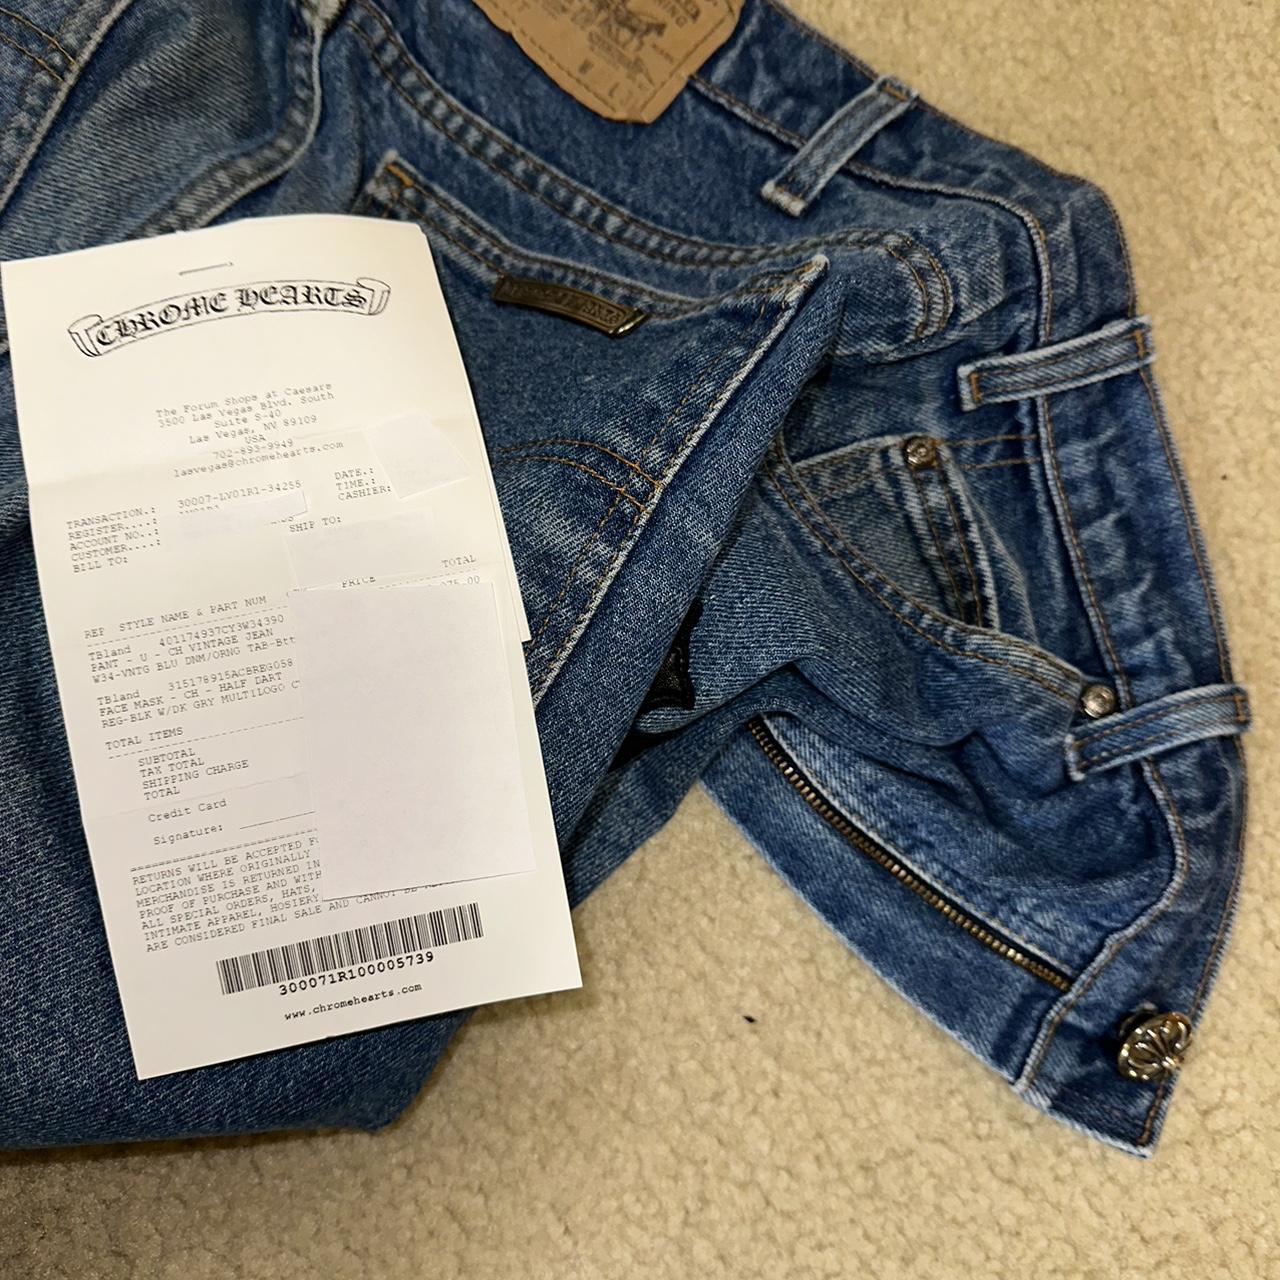 CUSTOM CHROME HEARTS jeans on 511 levi's 🤯 hand - Depop